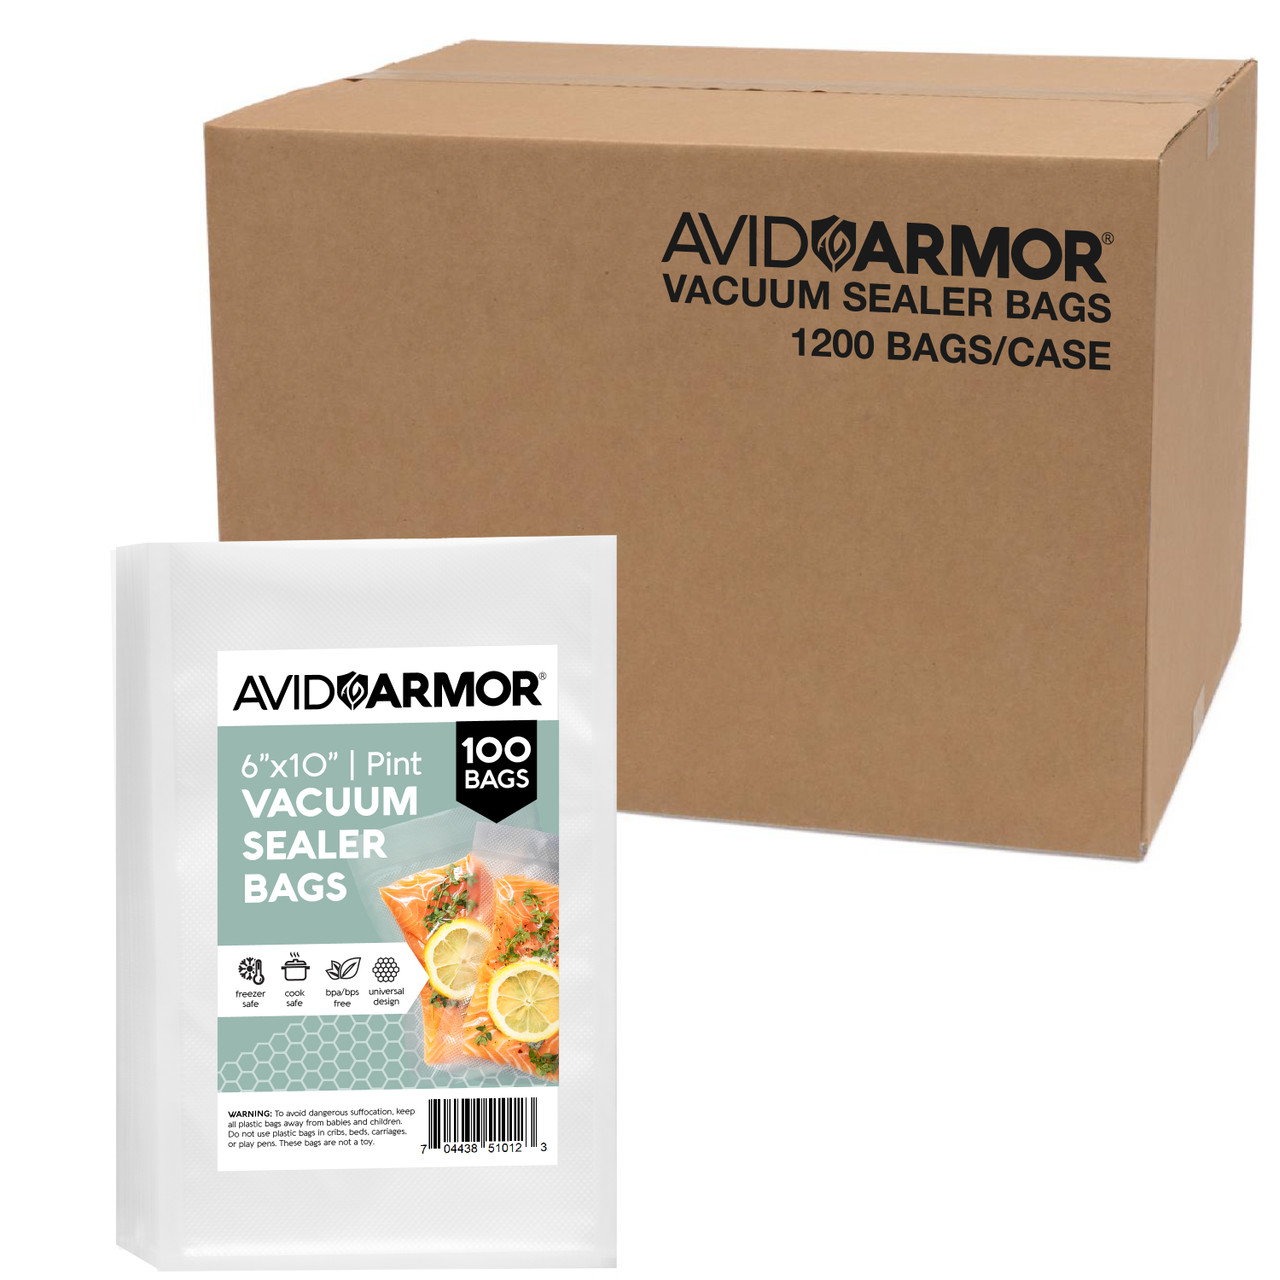 Food Vacuum Sealer Bags Pint Size Pre-Cut (6x10) from Avid Armor